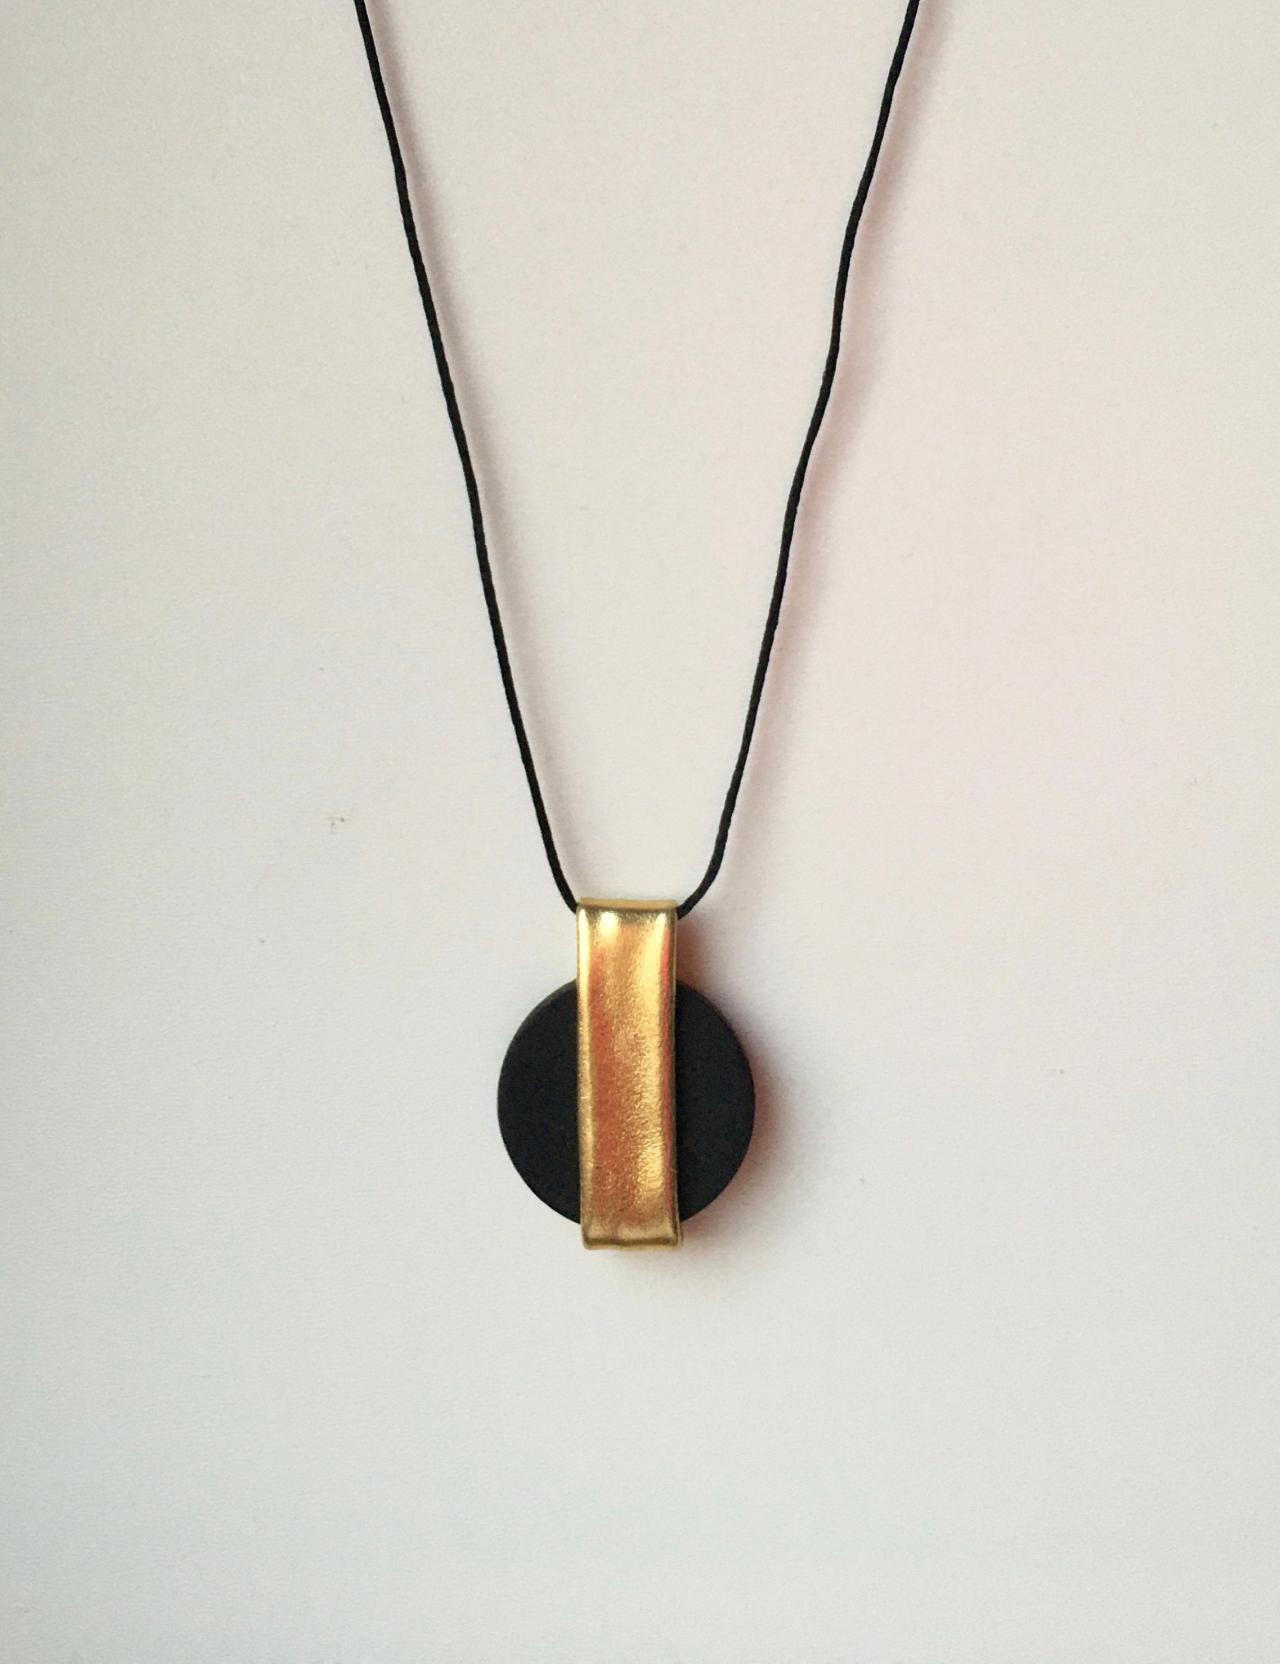 Clo necklace black / gold - Collar Clo negro/dorado